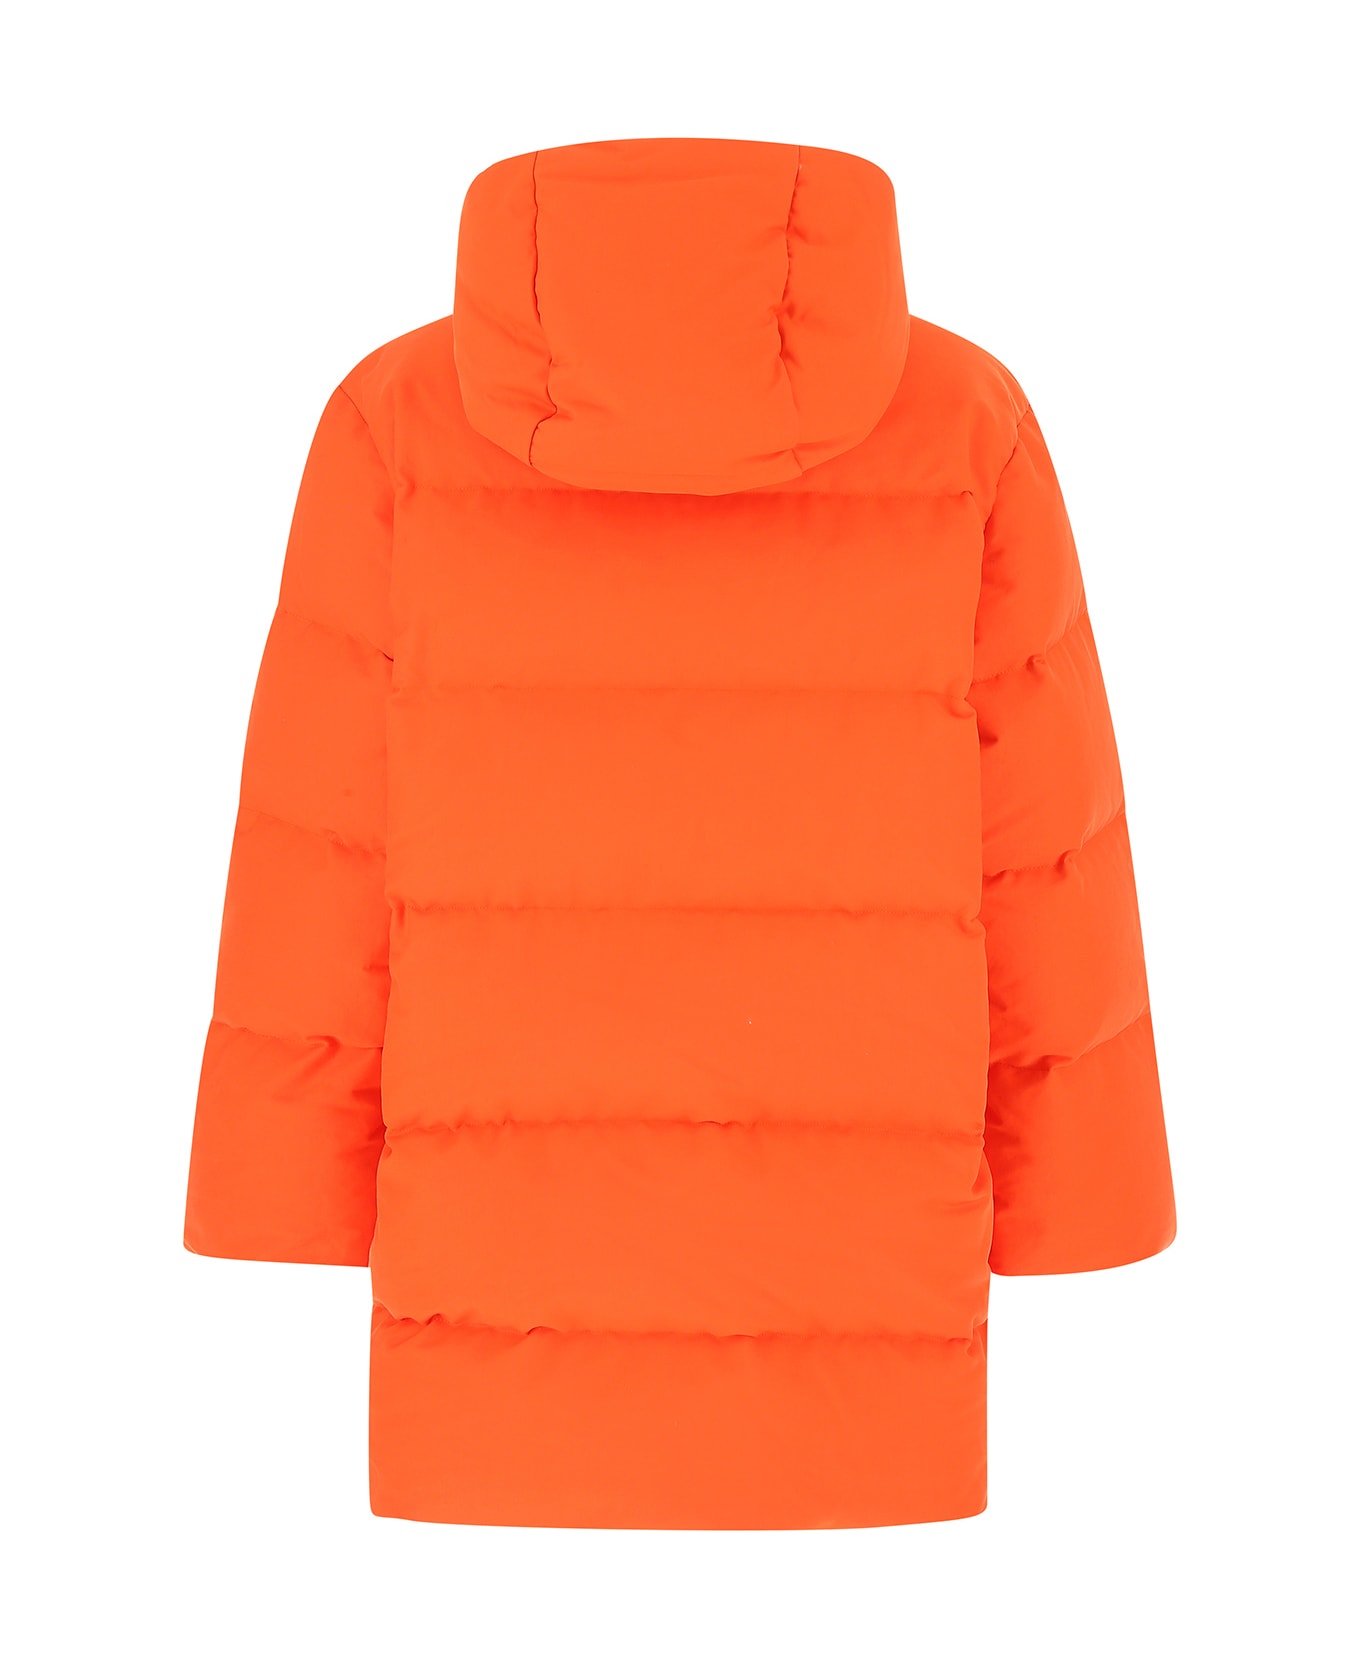 Loewe Orange Cotton Down Jacket - HAZARDORANGE コート